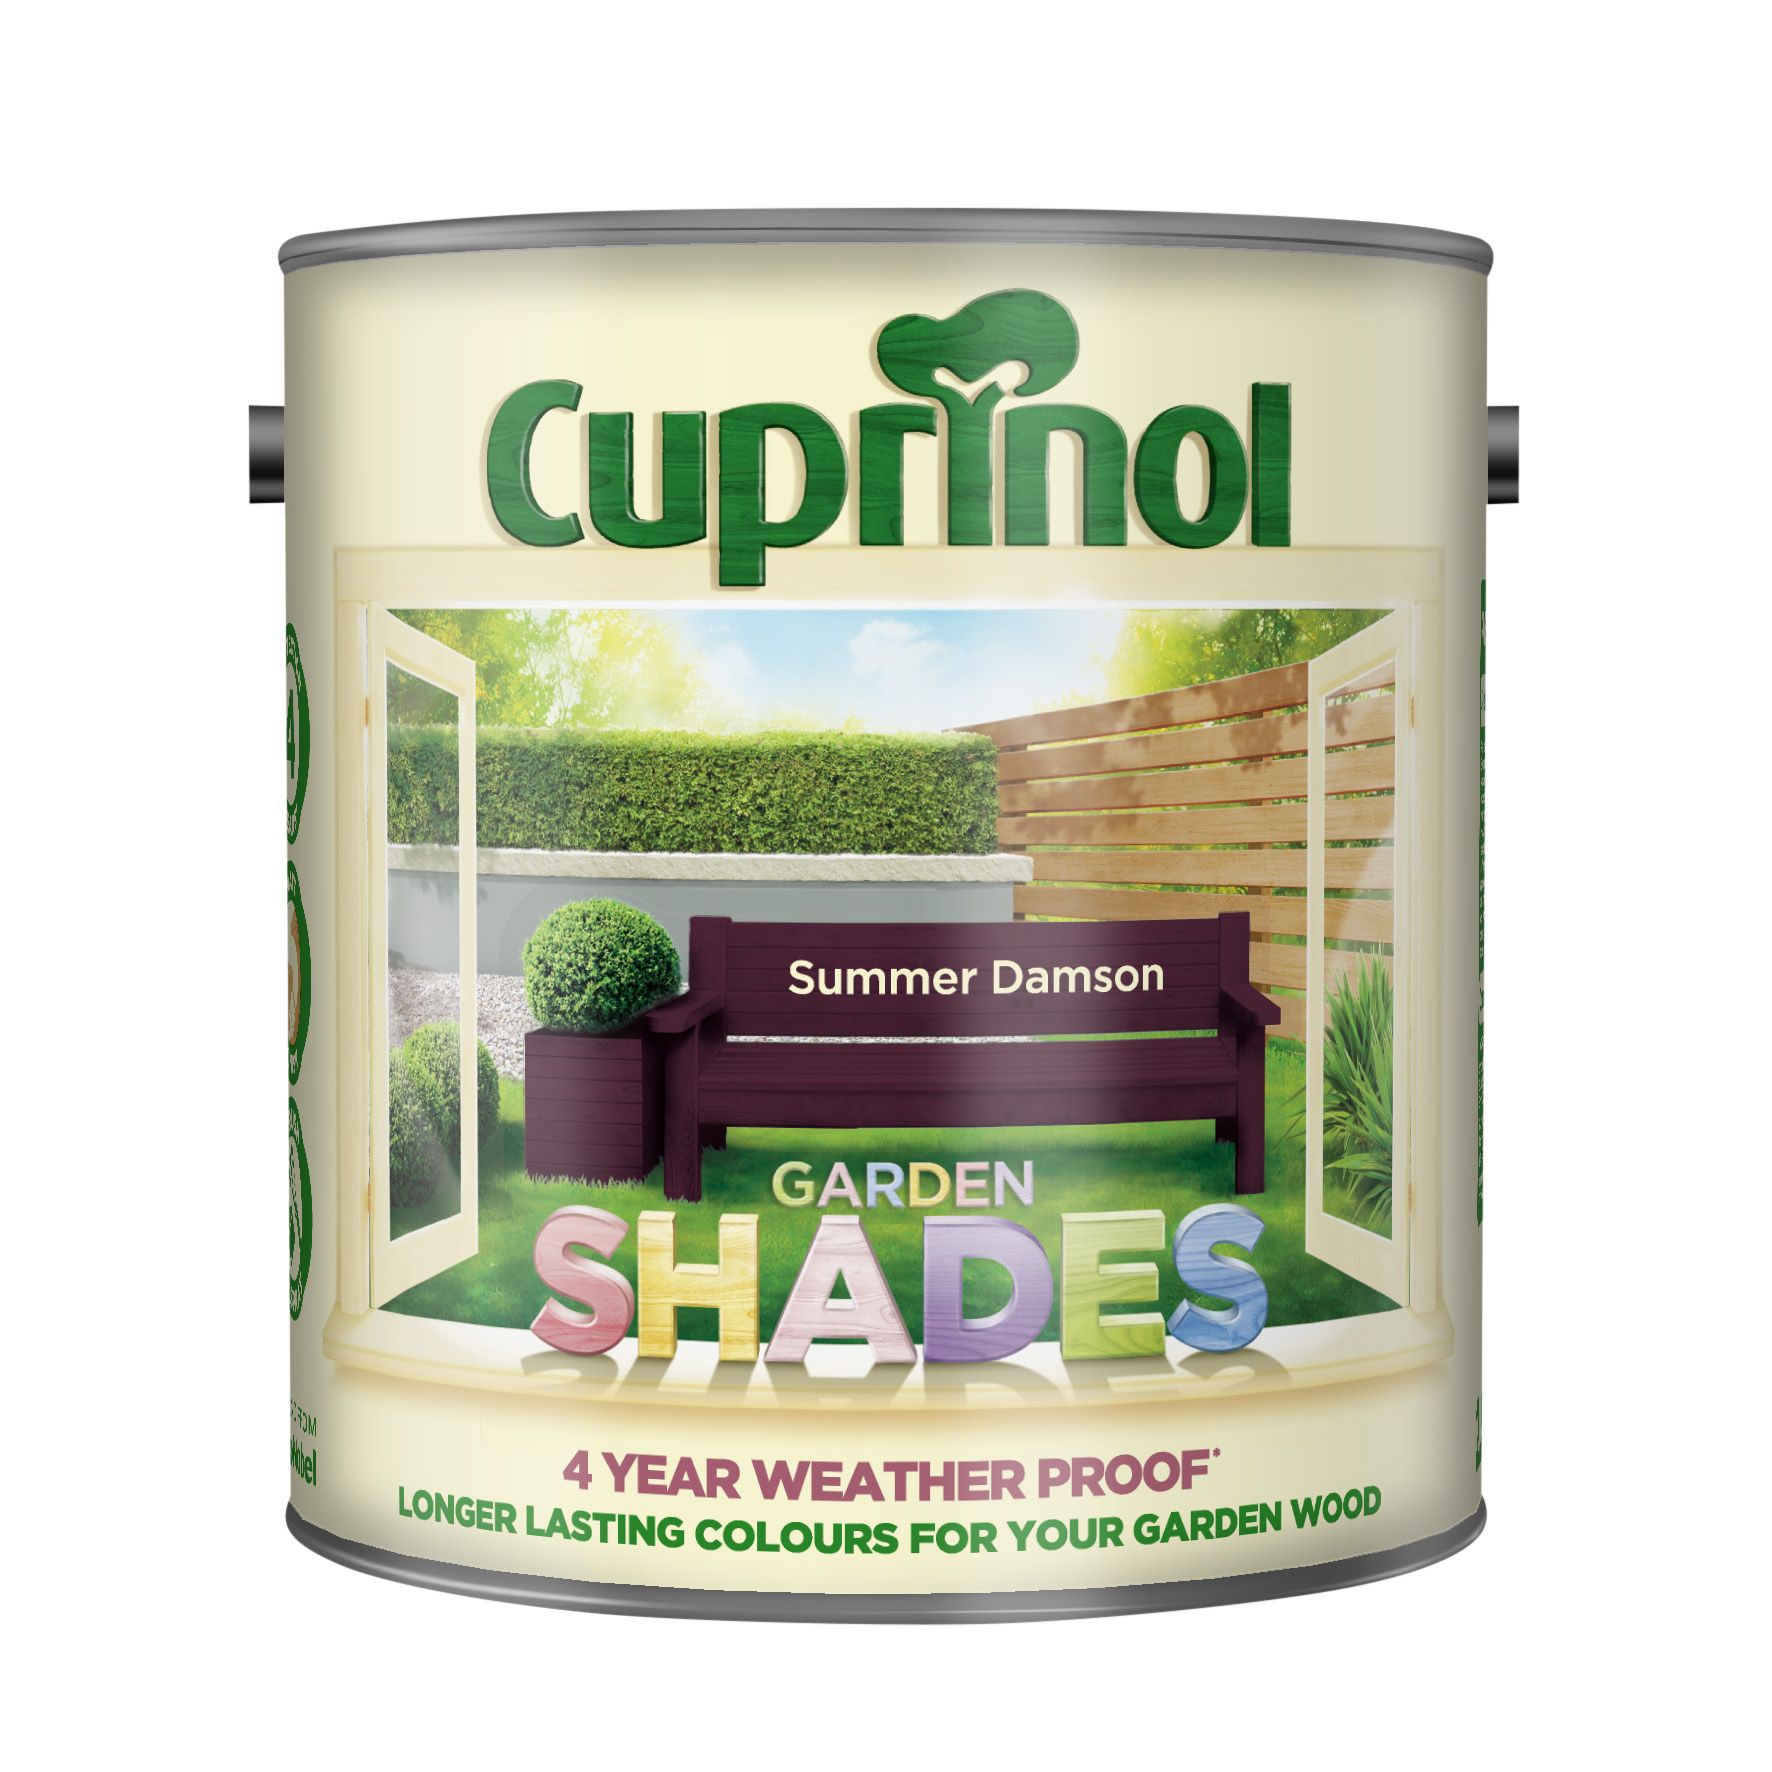 Cuprinol Garden shades Summer damson Matt Multi-surface Exterior Wood paint, 2.5L